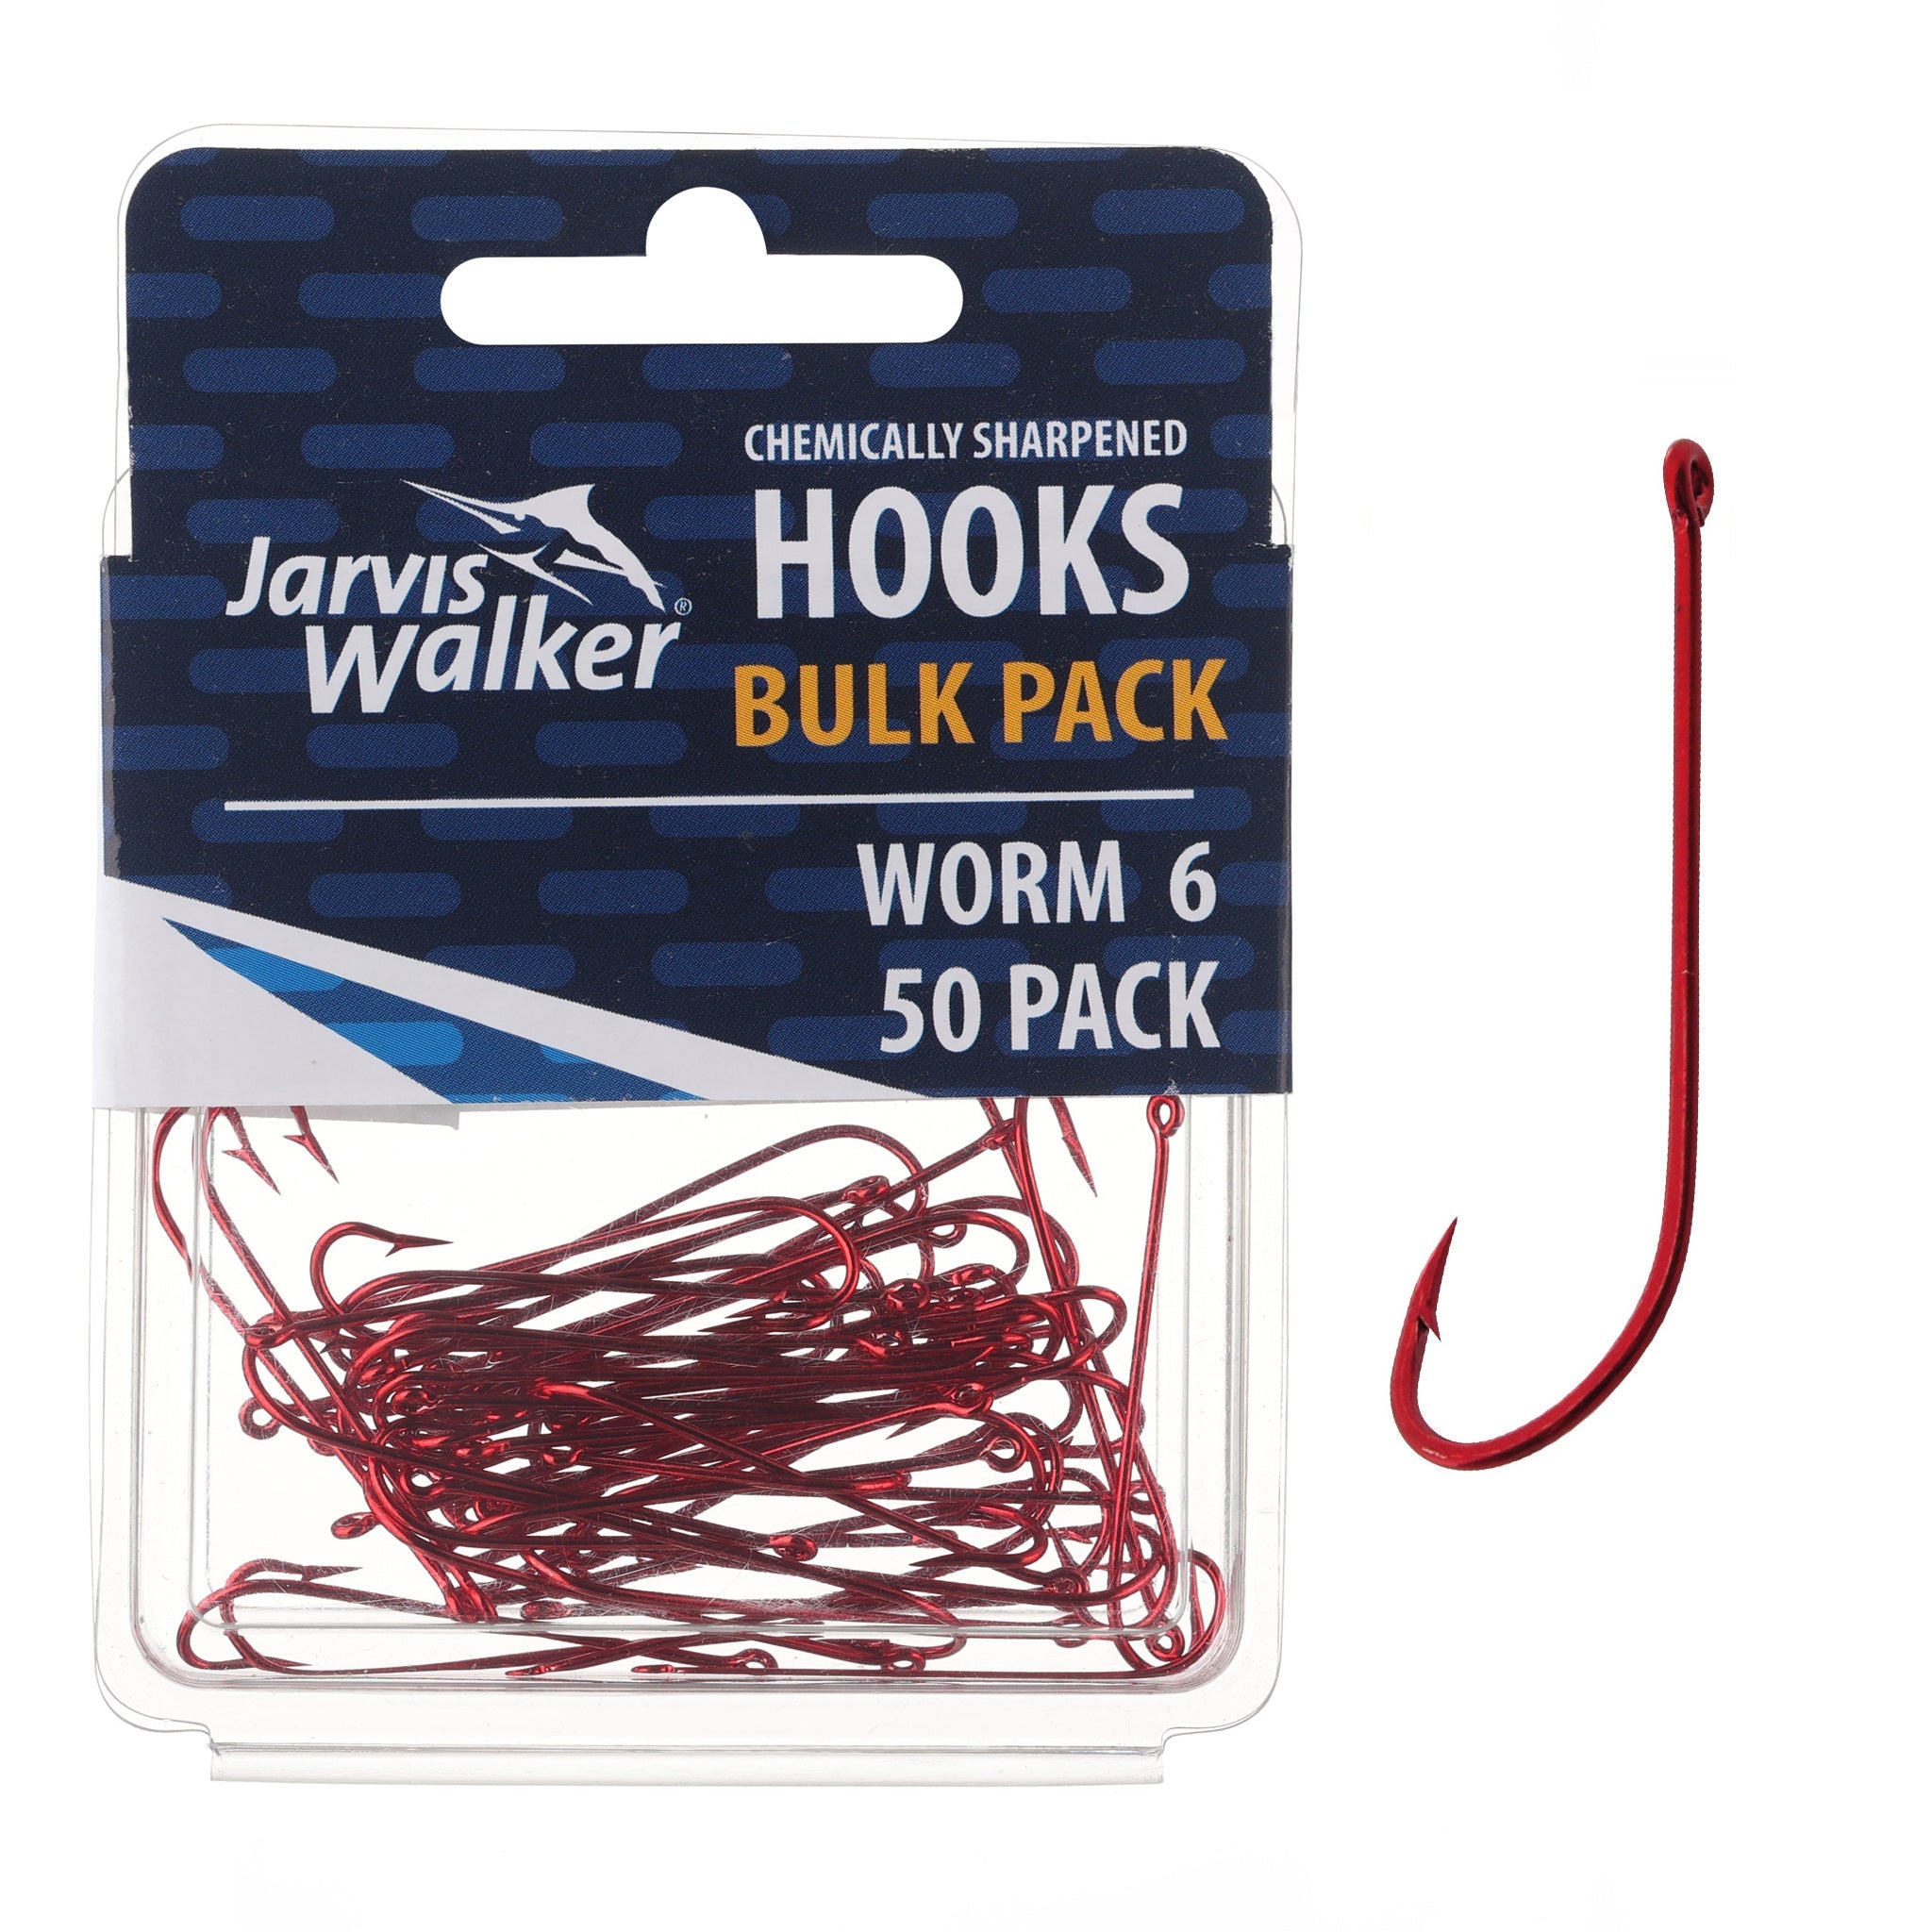 Jarvis Walker Chemically Sharpened Long Shank/Worm Hooks - 50